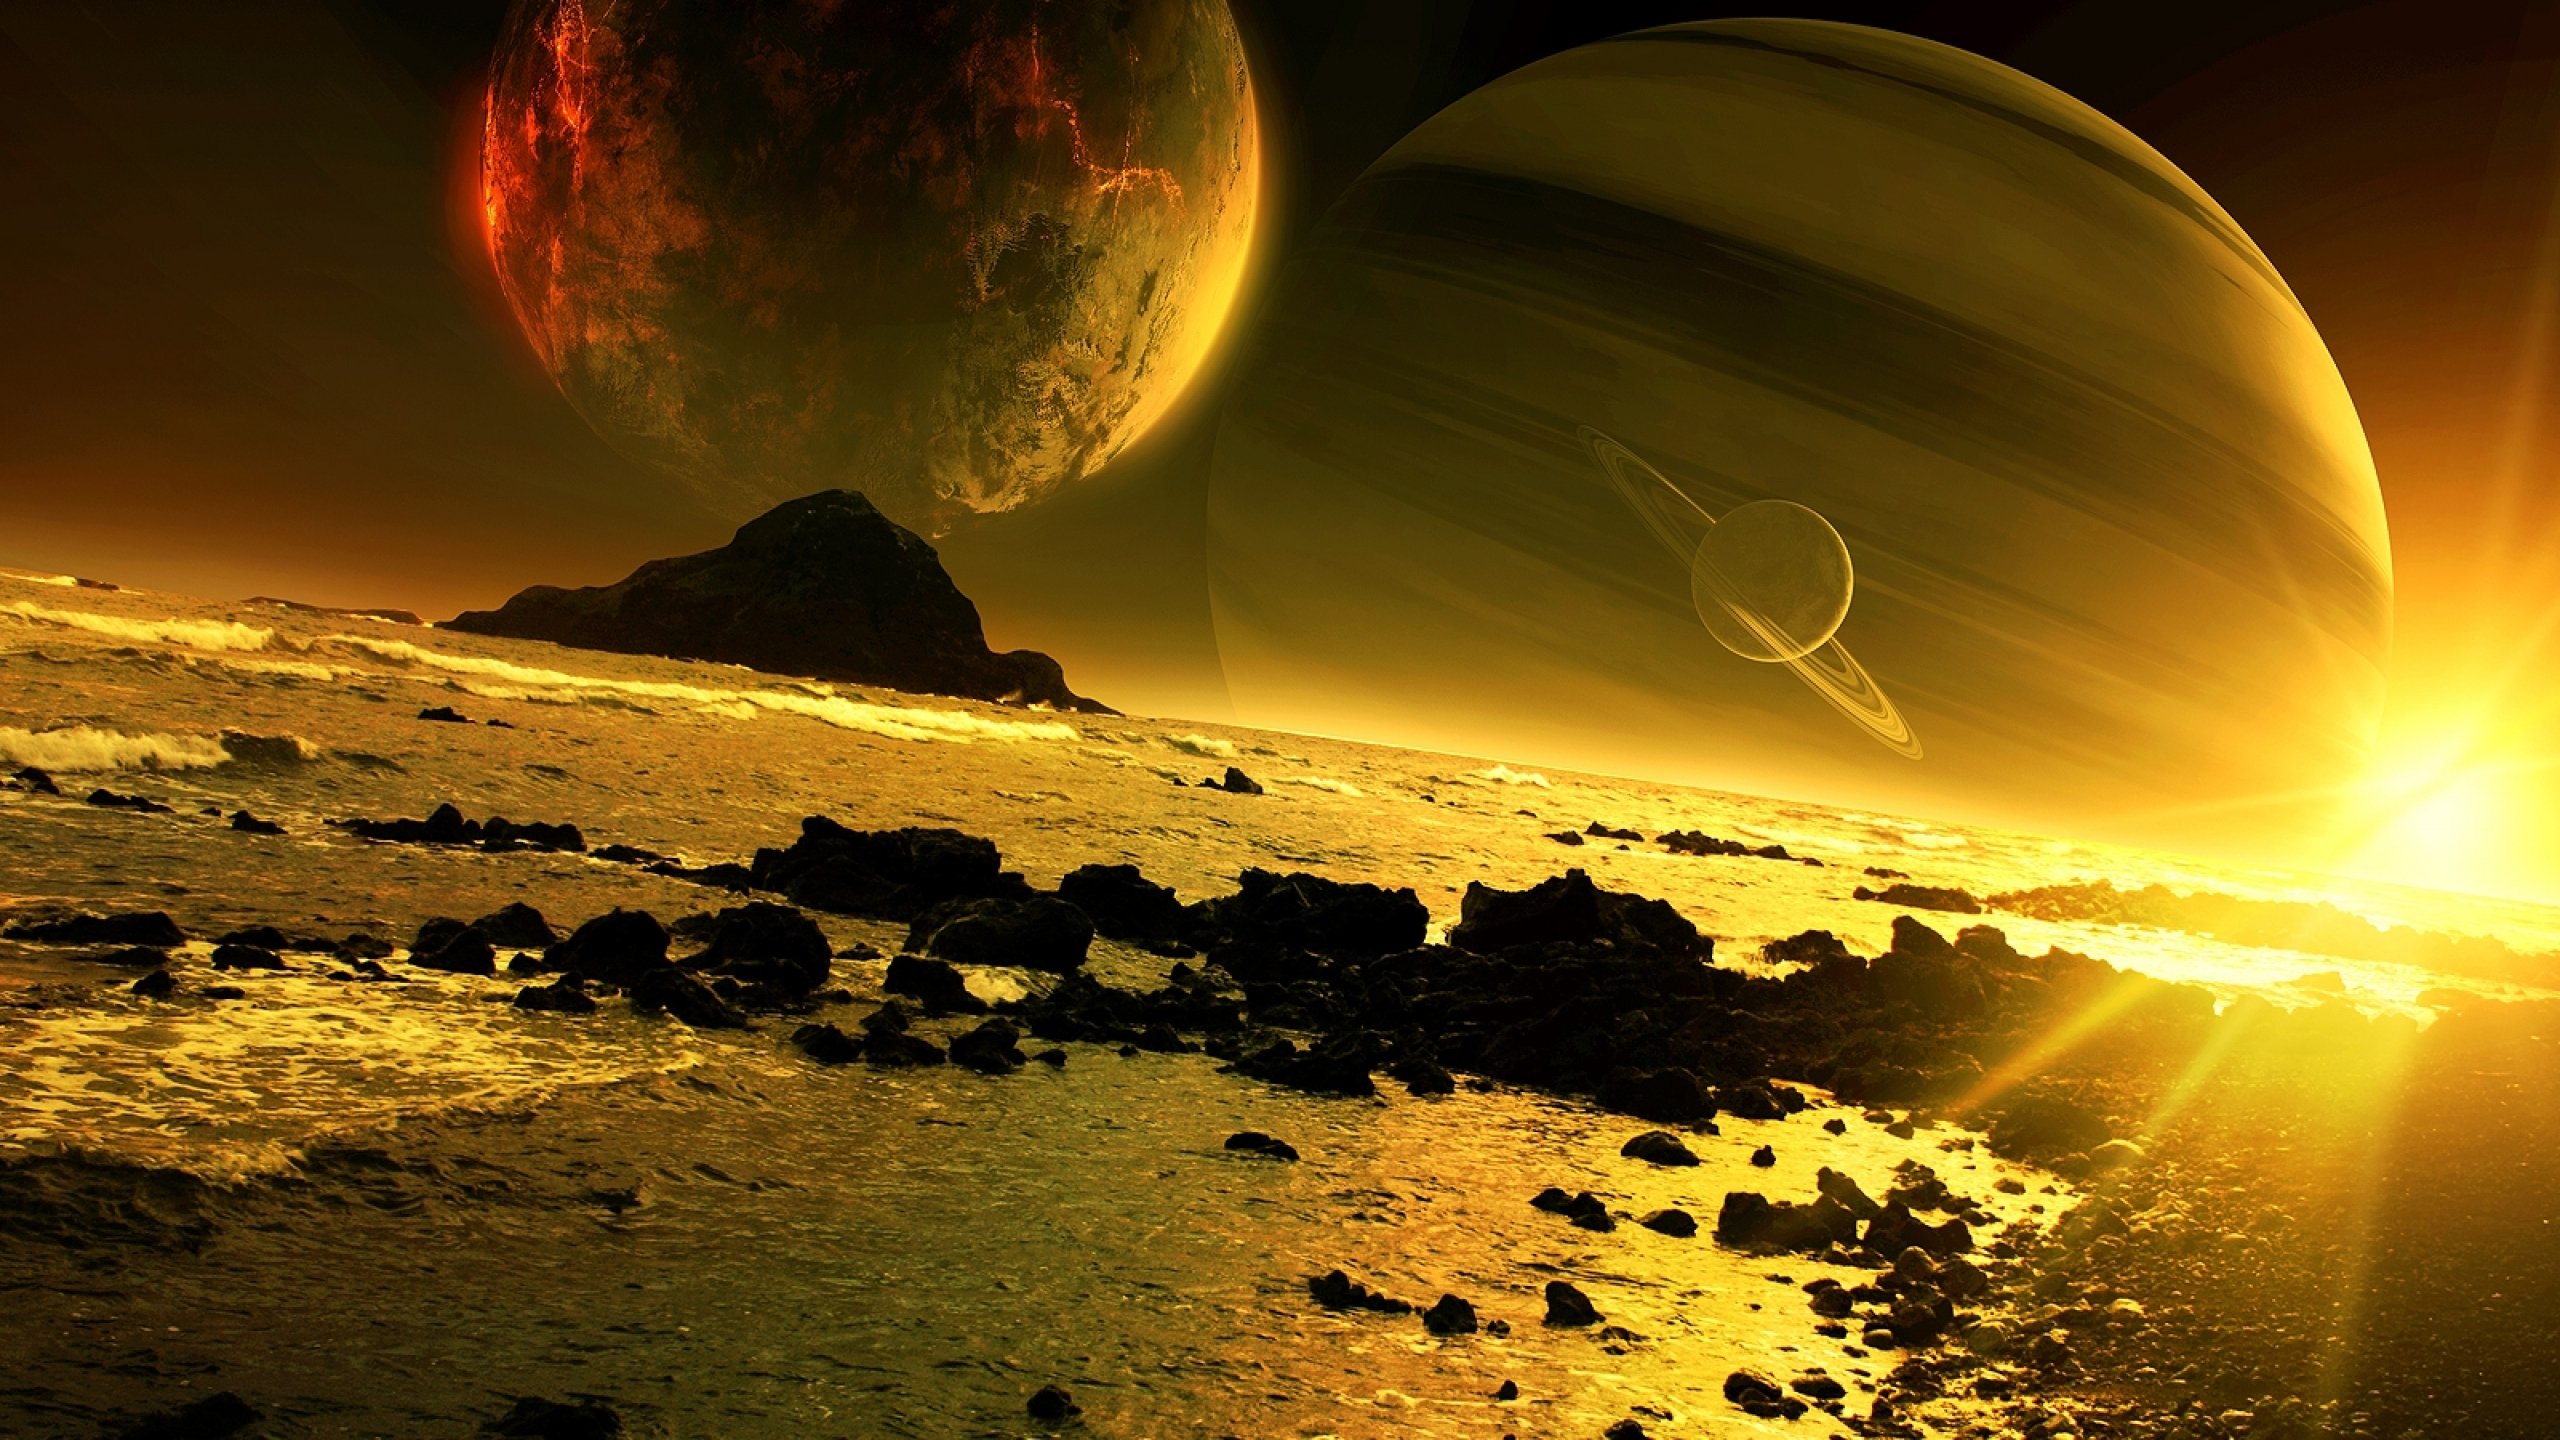 Planetscape Sci Fi Planet Landscape Space Art Artwork Wallpapers Hd Desktop And Mobile 7037